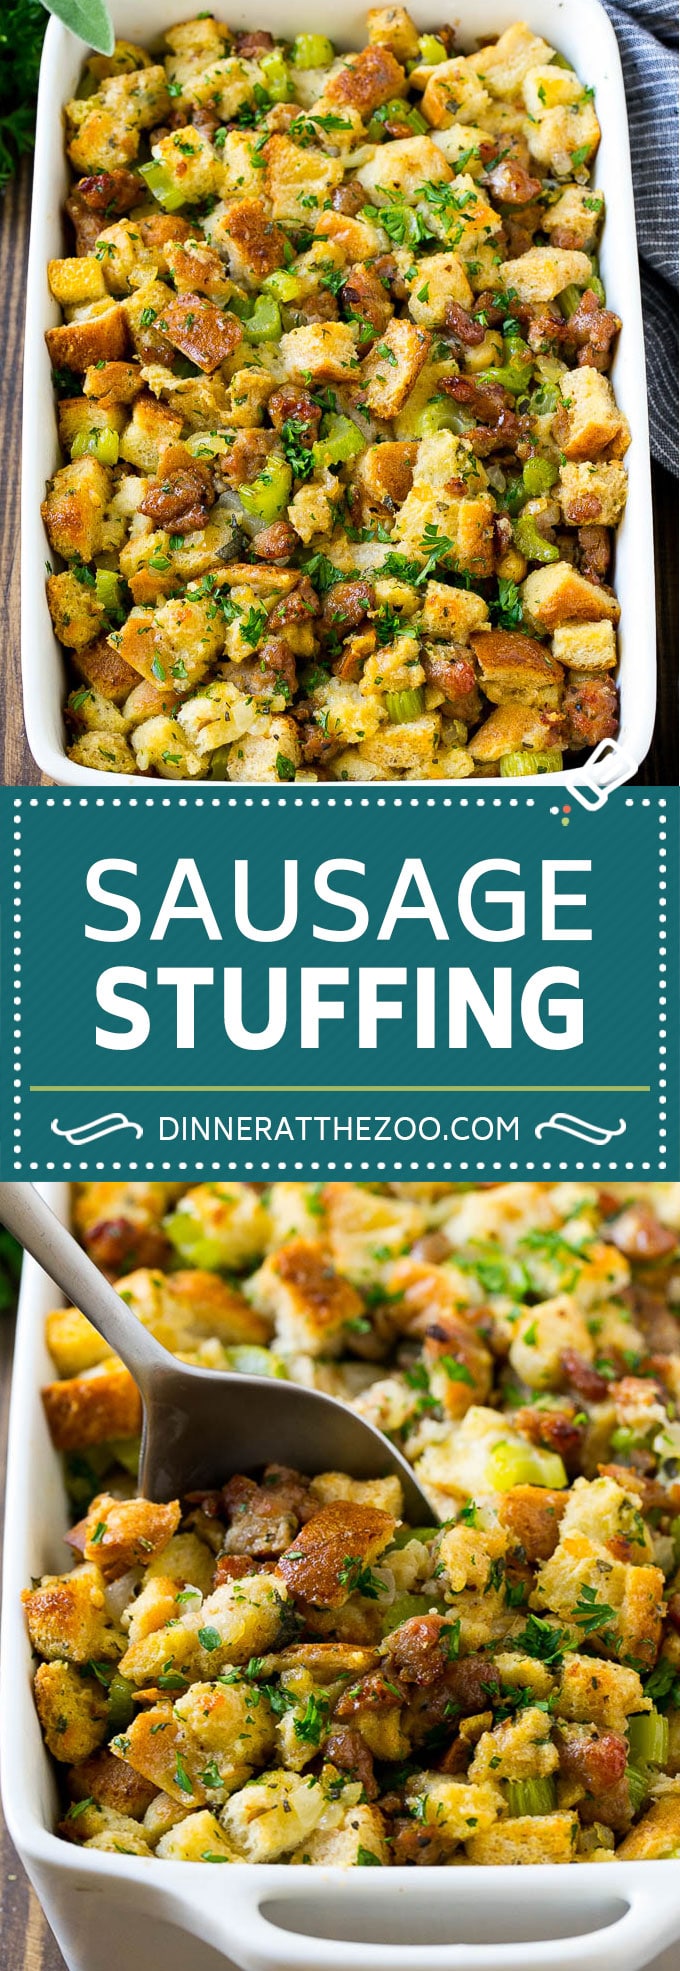 Sausage Stuffing Recipe | Thanksgiving Stuffing | Make Ahead Stuffing #stuffing #thanksgiving #sausage #sidedish #dinner #dinneratthezoo